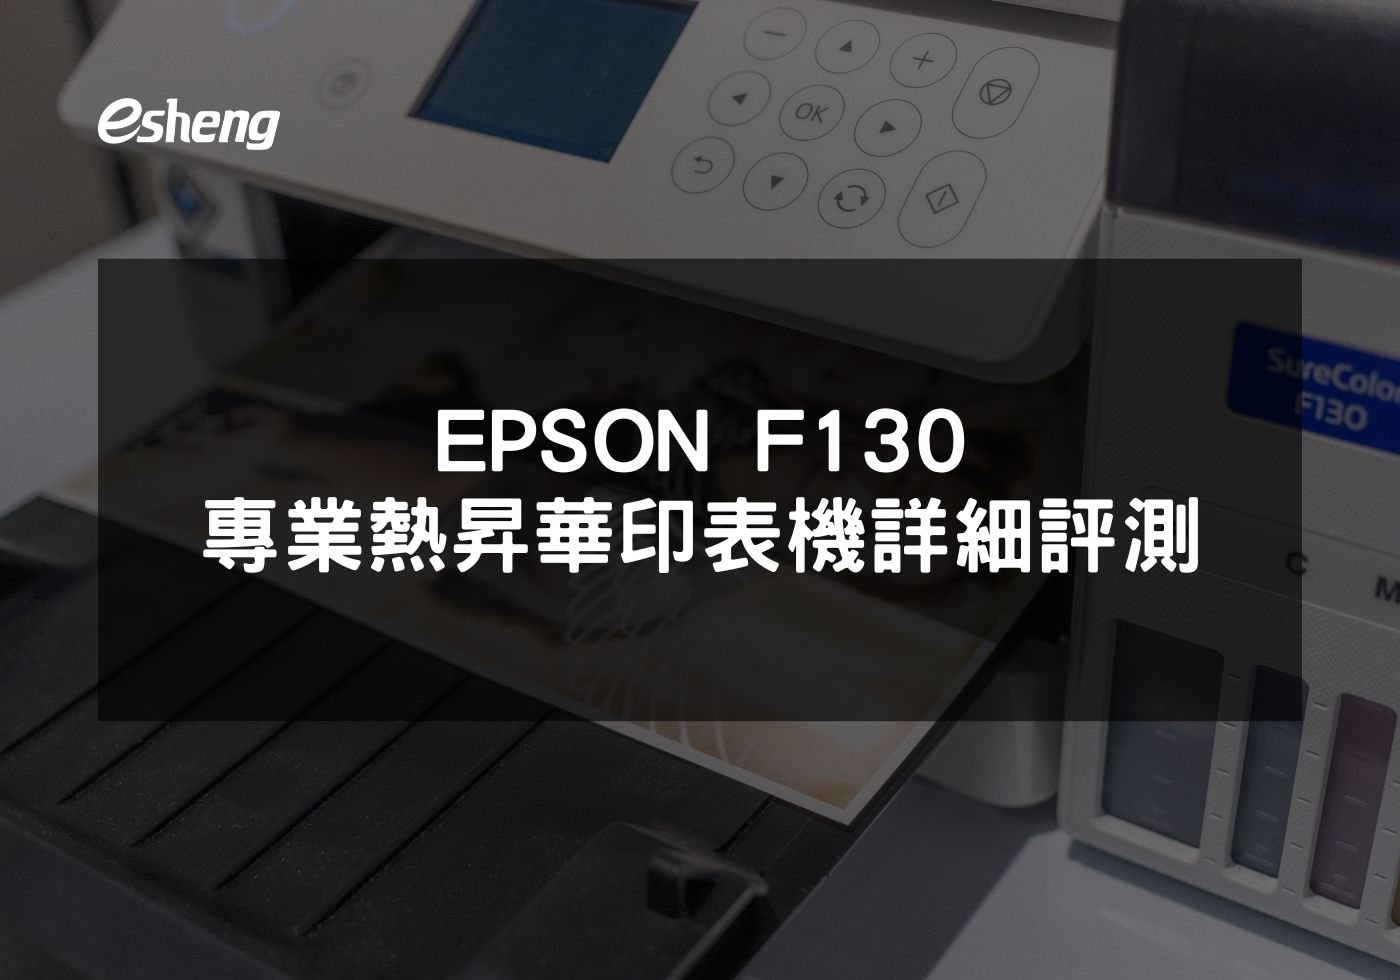 EPSON F130 專業熱昇華印表機詳細評測